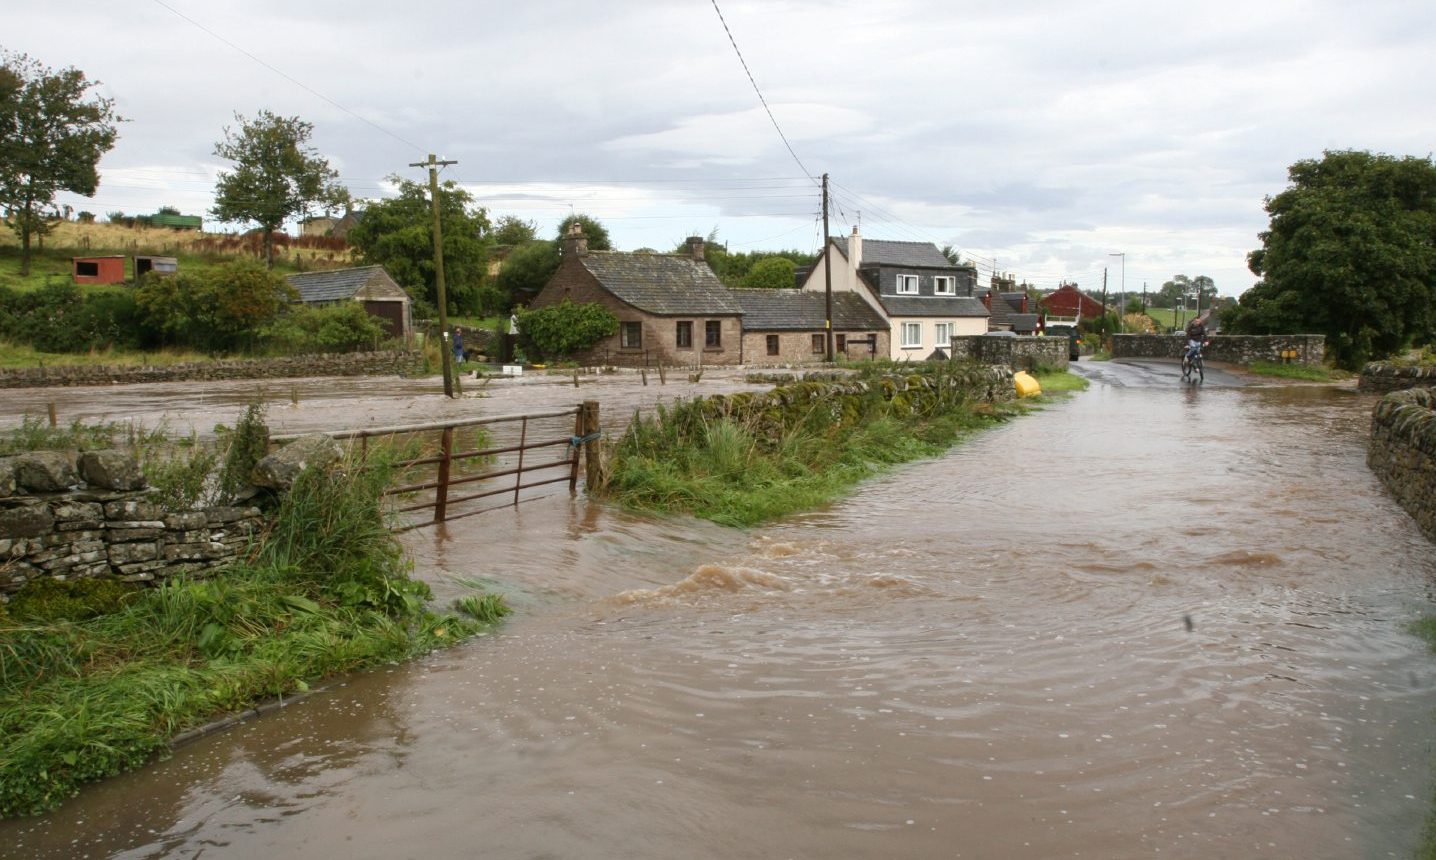 The Den in Letham regularly floods. Image: DC Thomson